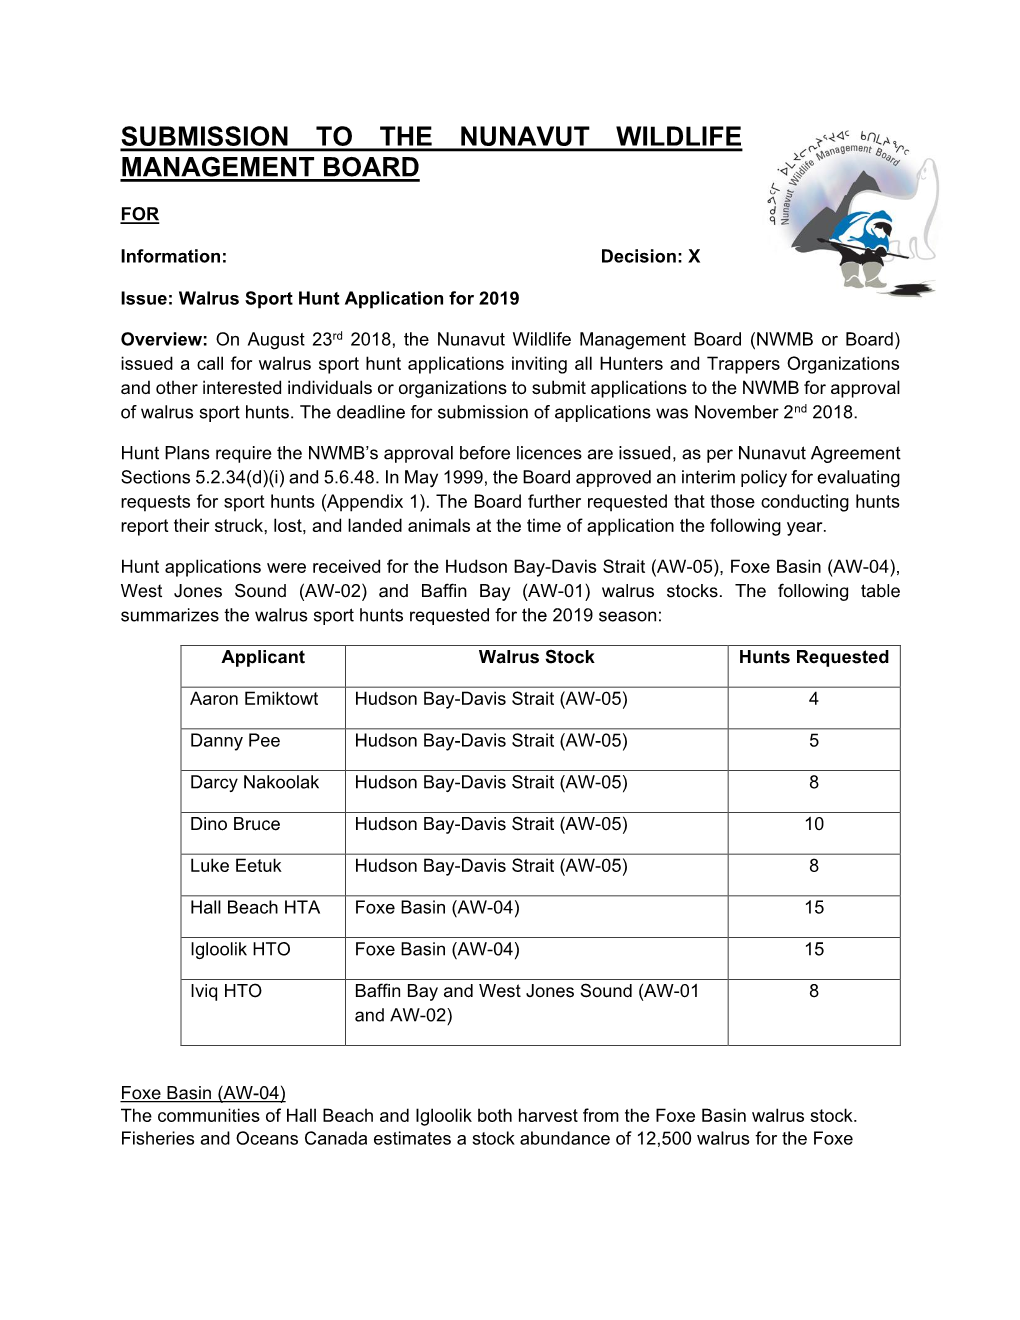 TAB11A NWMB Briefing Note Walrus Sport Hunts 2019 ENG